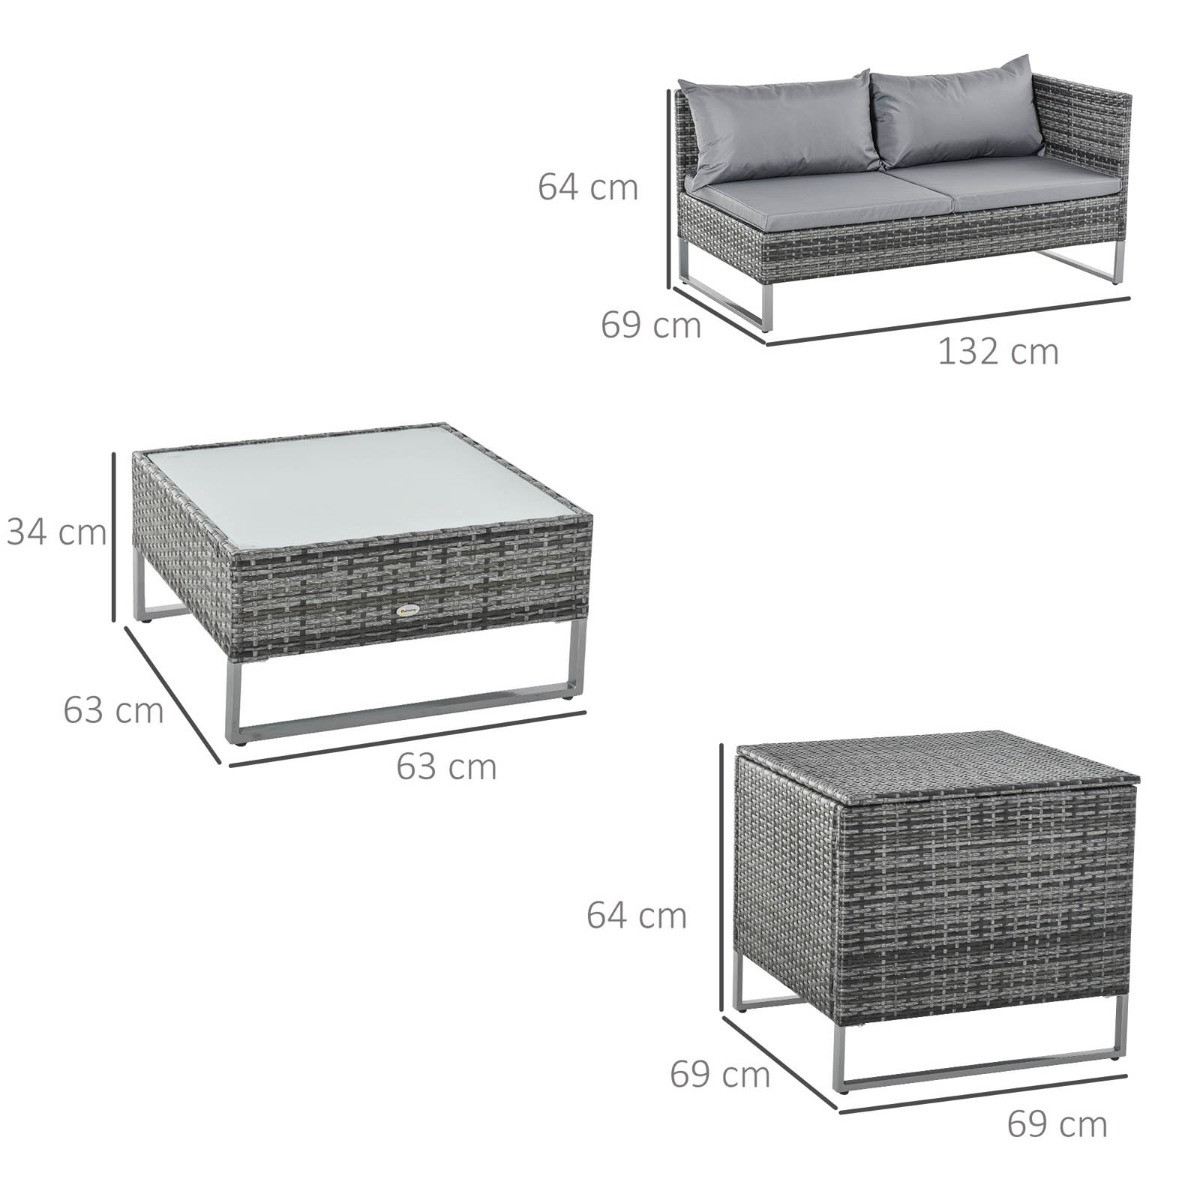 Outsunny Rattan Garden Furniture Sofa Set, Mixed Grey - 4 Seater>